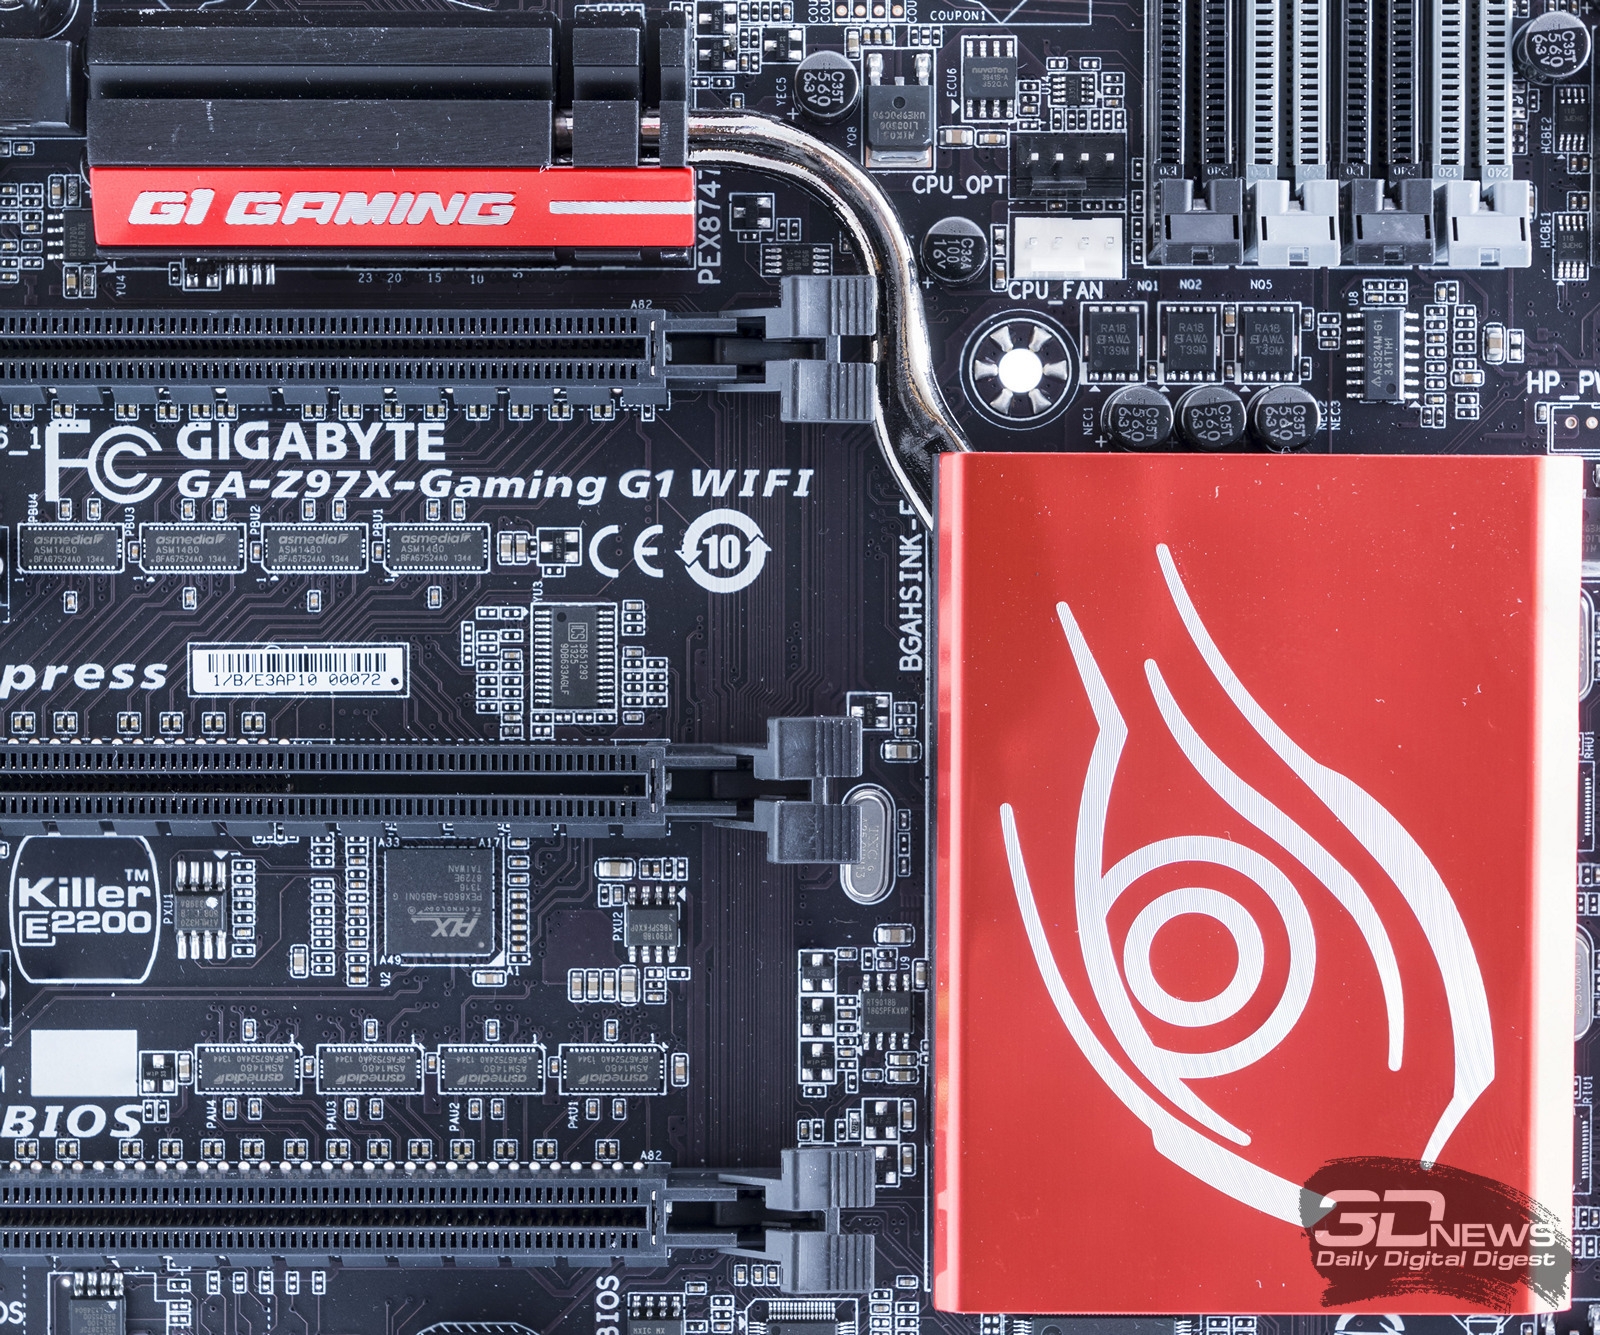 Плата gigabyte b660m gaming x. Gigabyte ga-z97x-Gaming g1. Gigabyte Gaming x. Материнская плата Gigabyte ga-z97x-Gaming g1 WIFI-BK. Звуковые сигналы материнской платы Gigabyte.